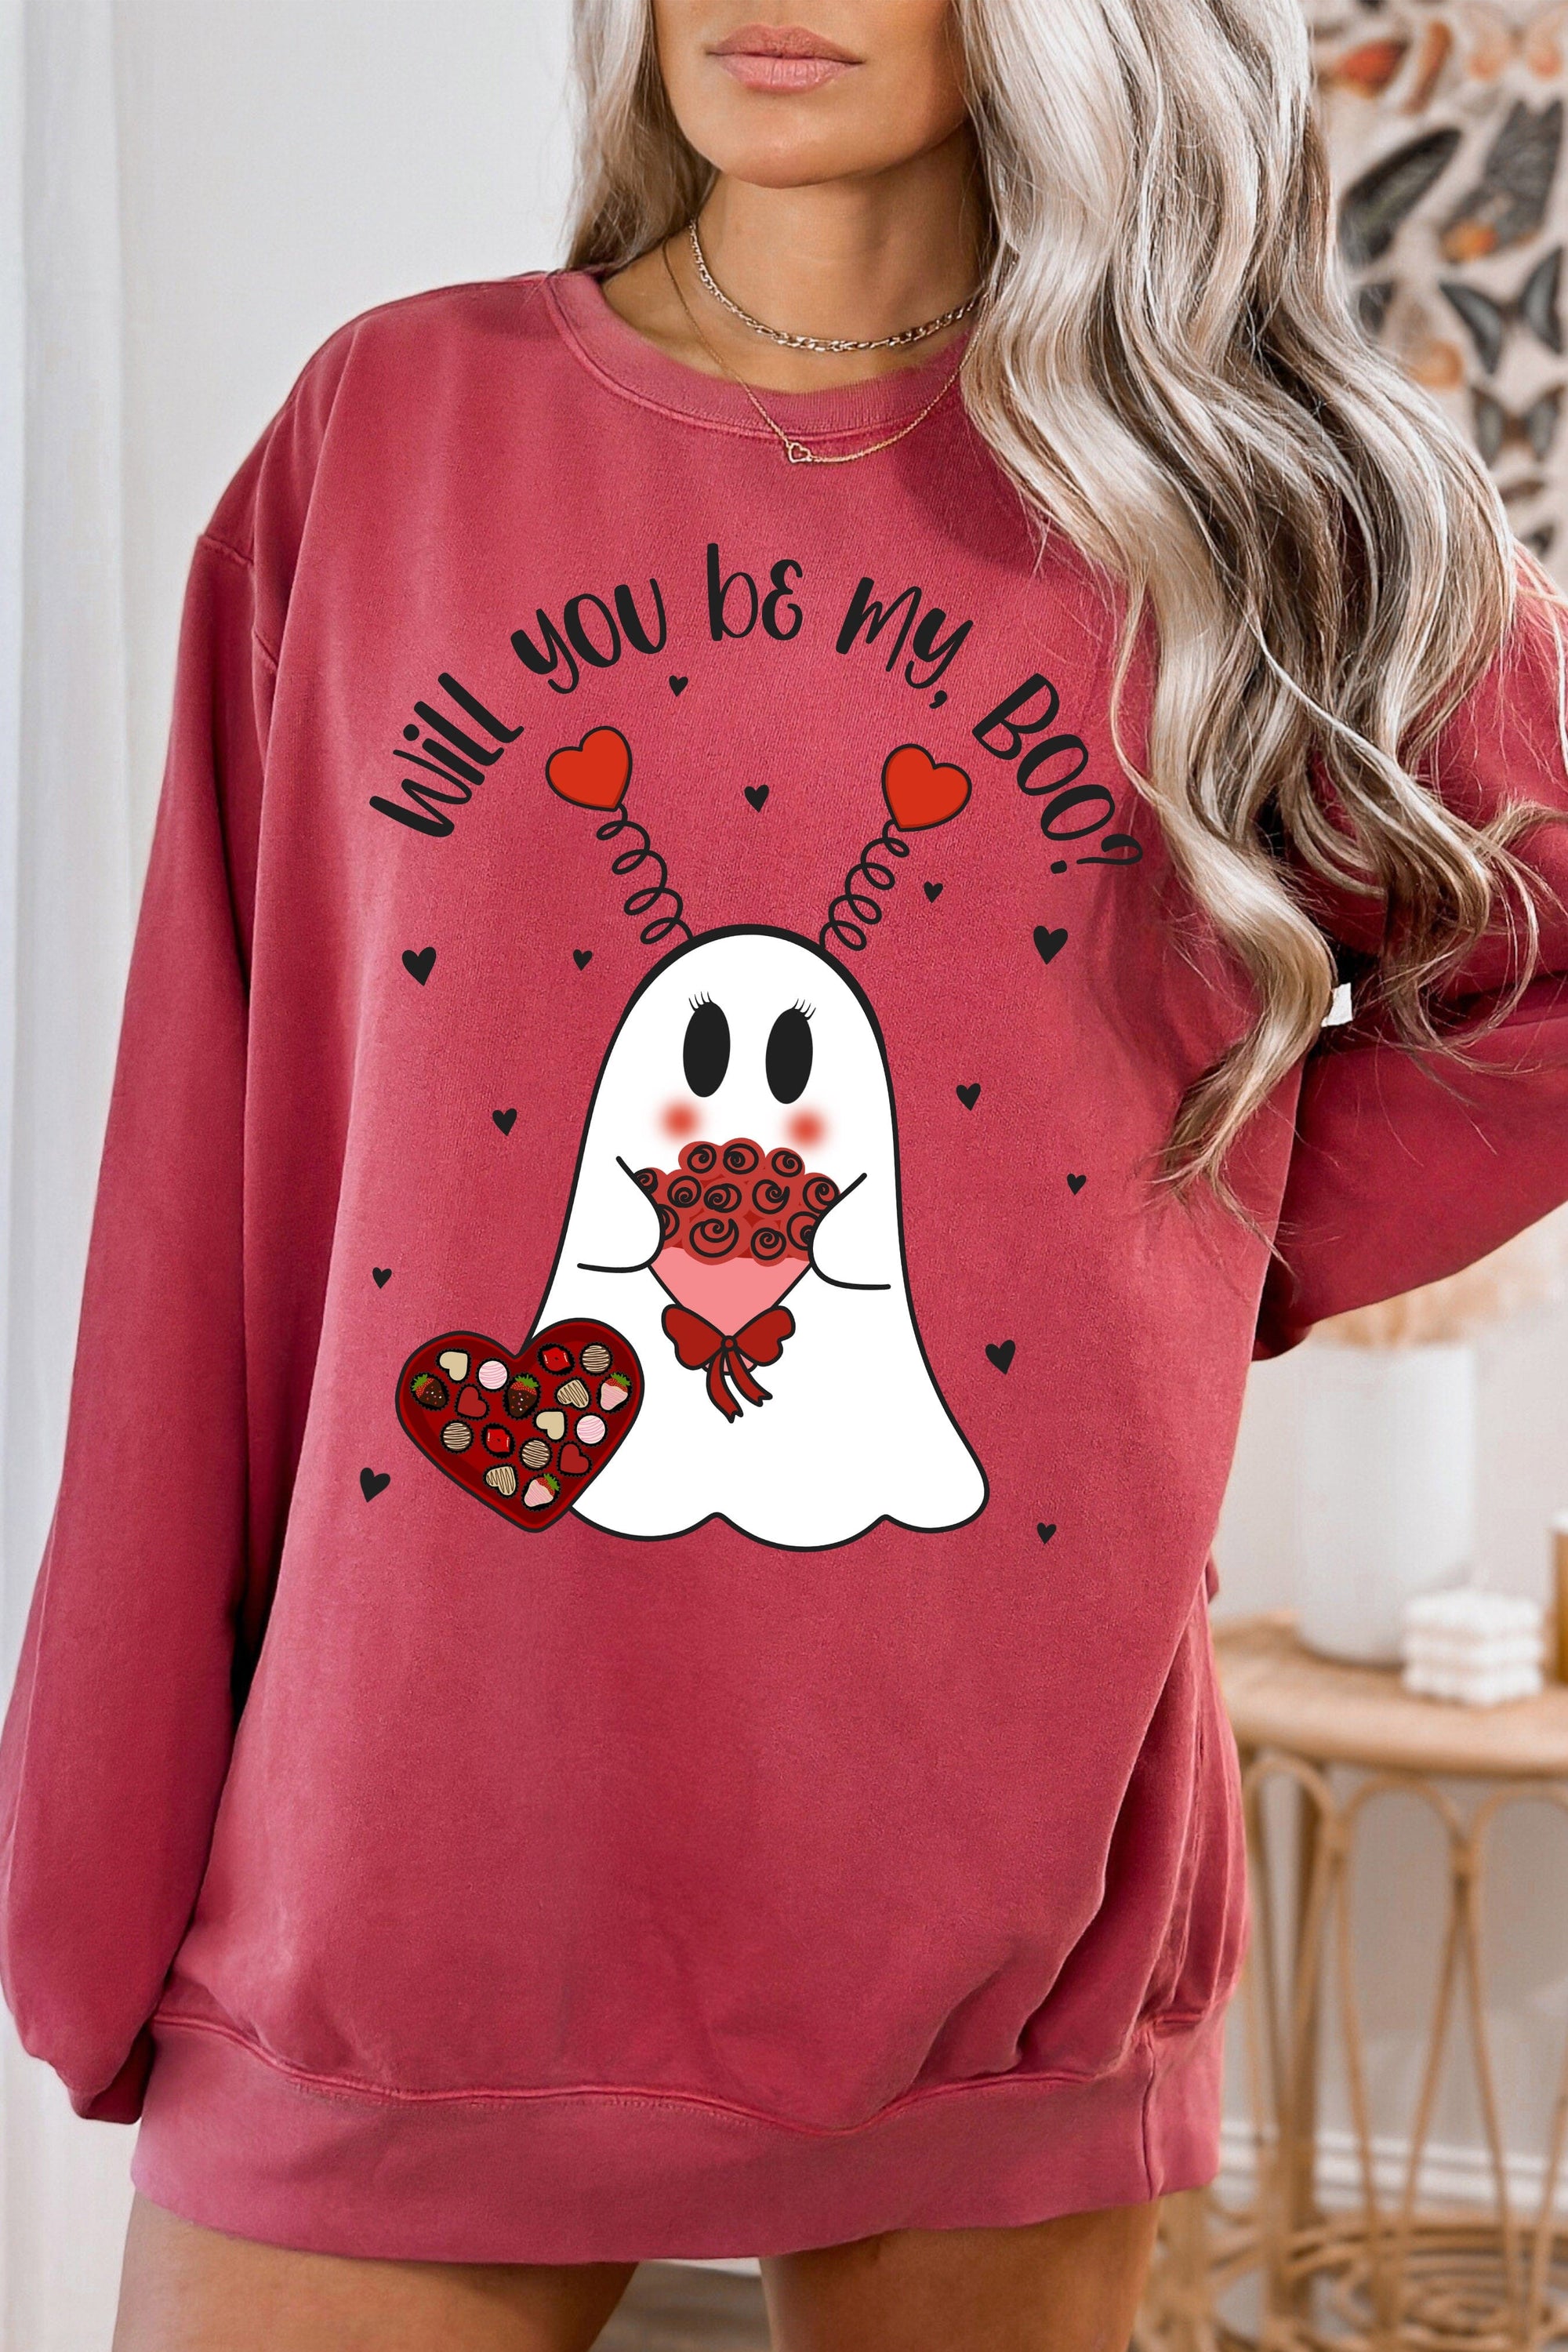 Will You Be My Boo Sweatshirt